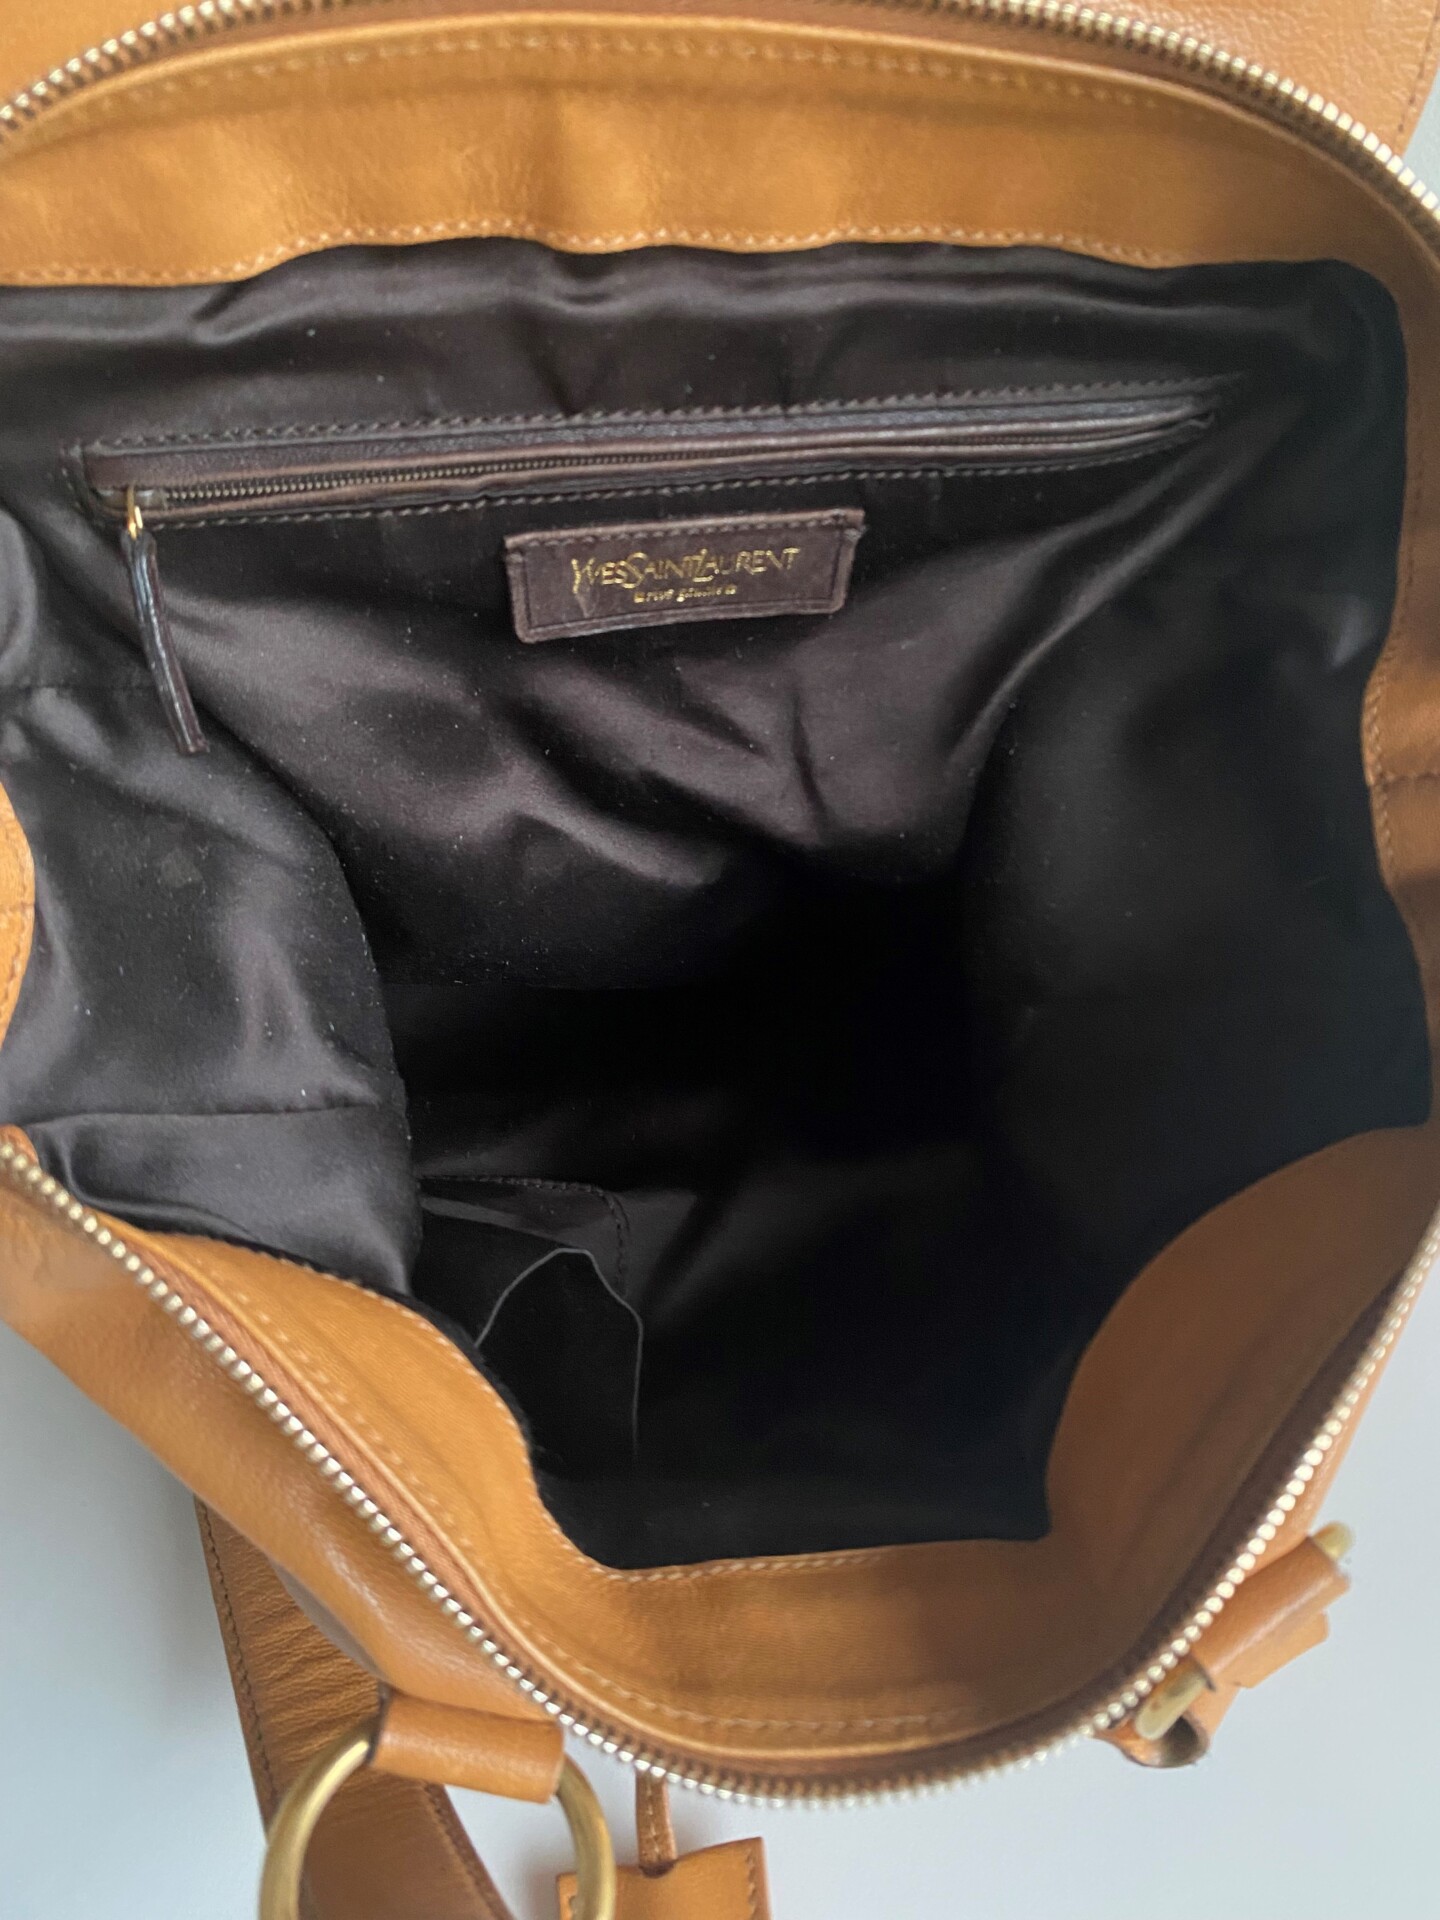 Yves Saint Laurent Muse Messenger bag